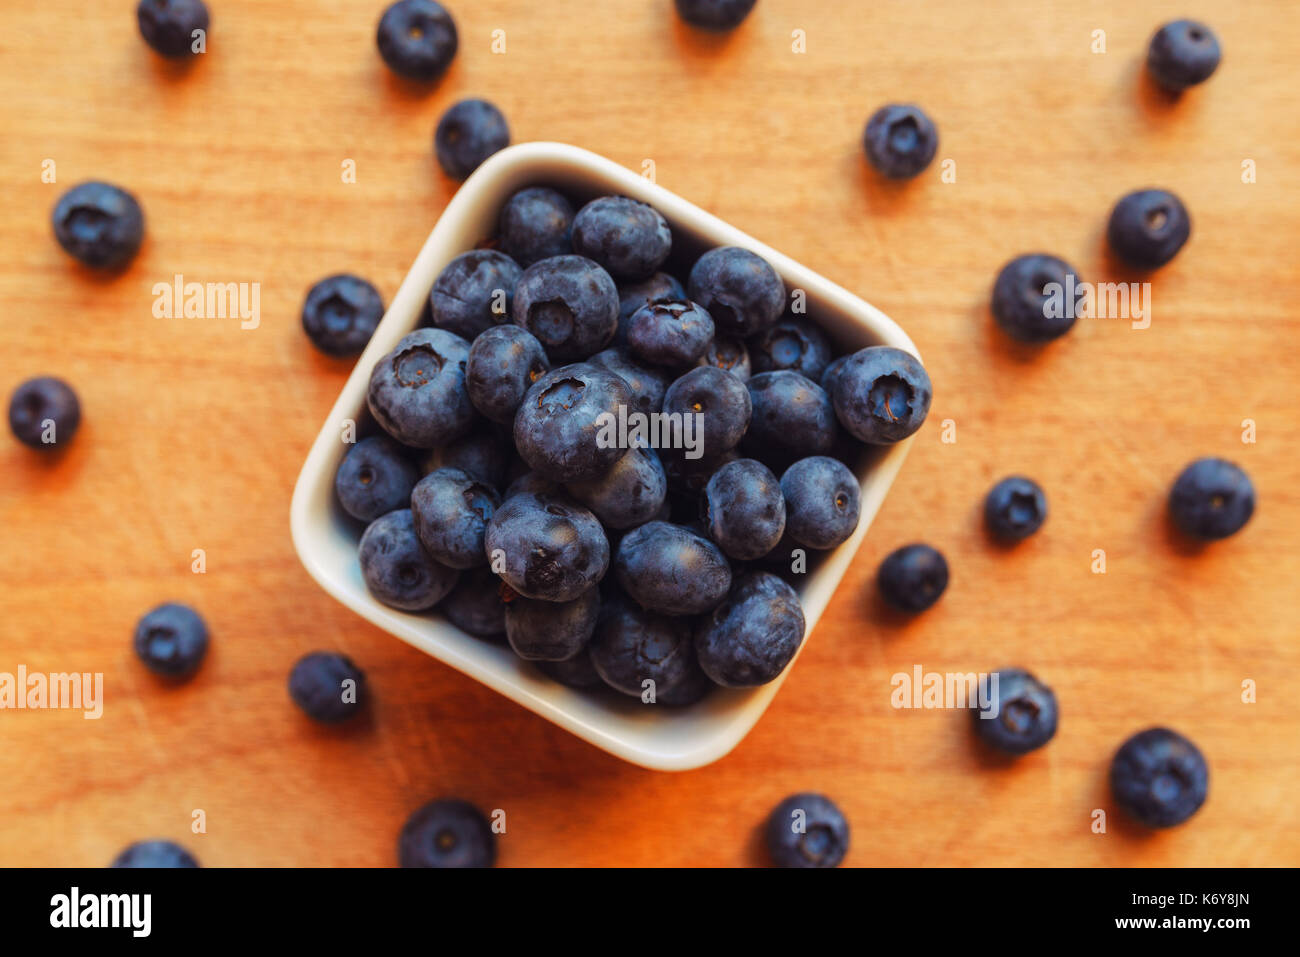 Blueberries in white ceramic bowl on table Stock Photo